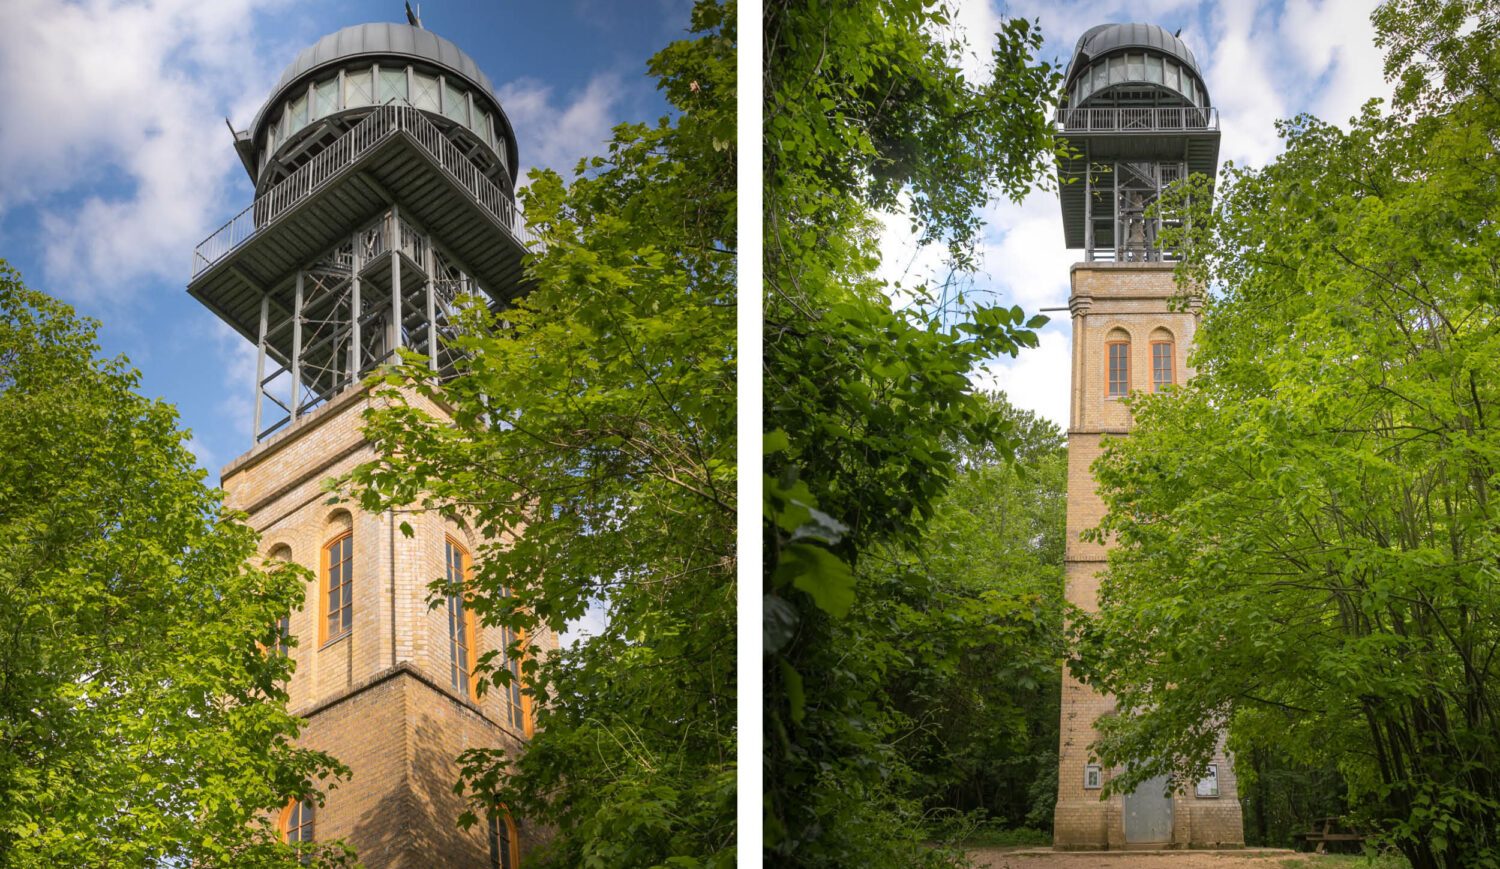 The Yellow Tower got its name because it is made of yellow bricks © Hildesheim Marketing GmbH